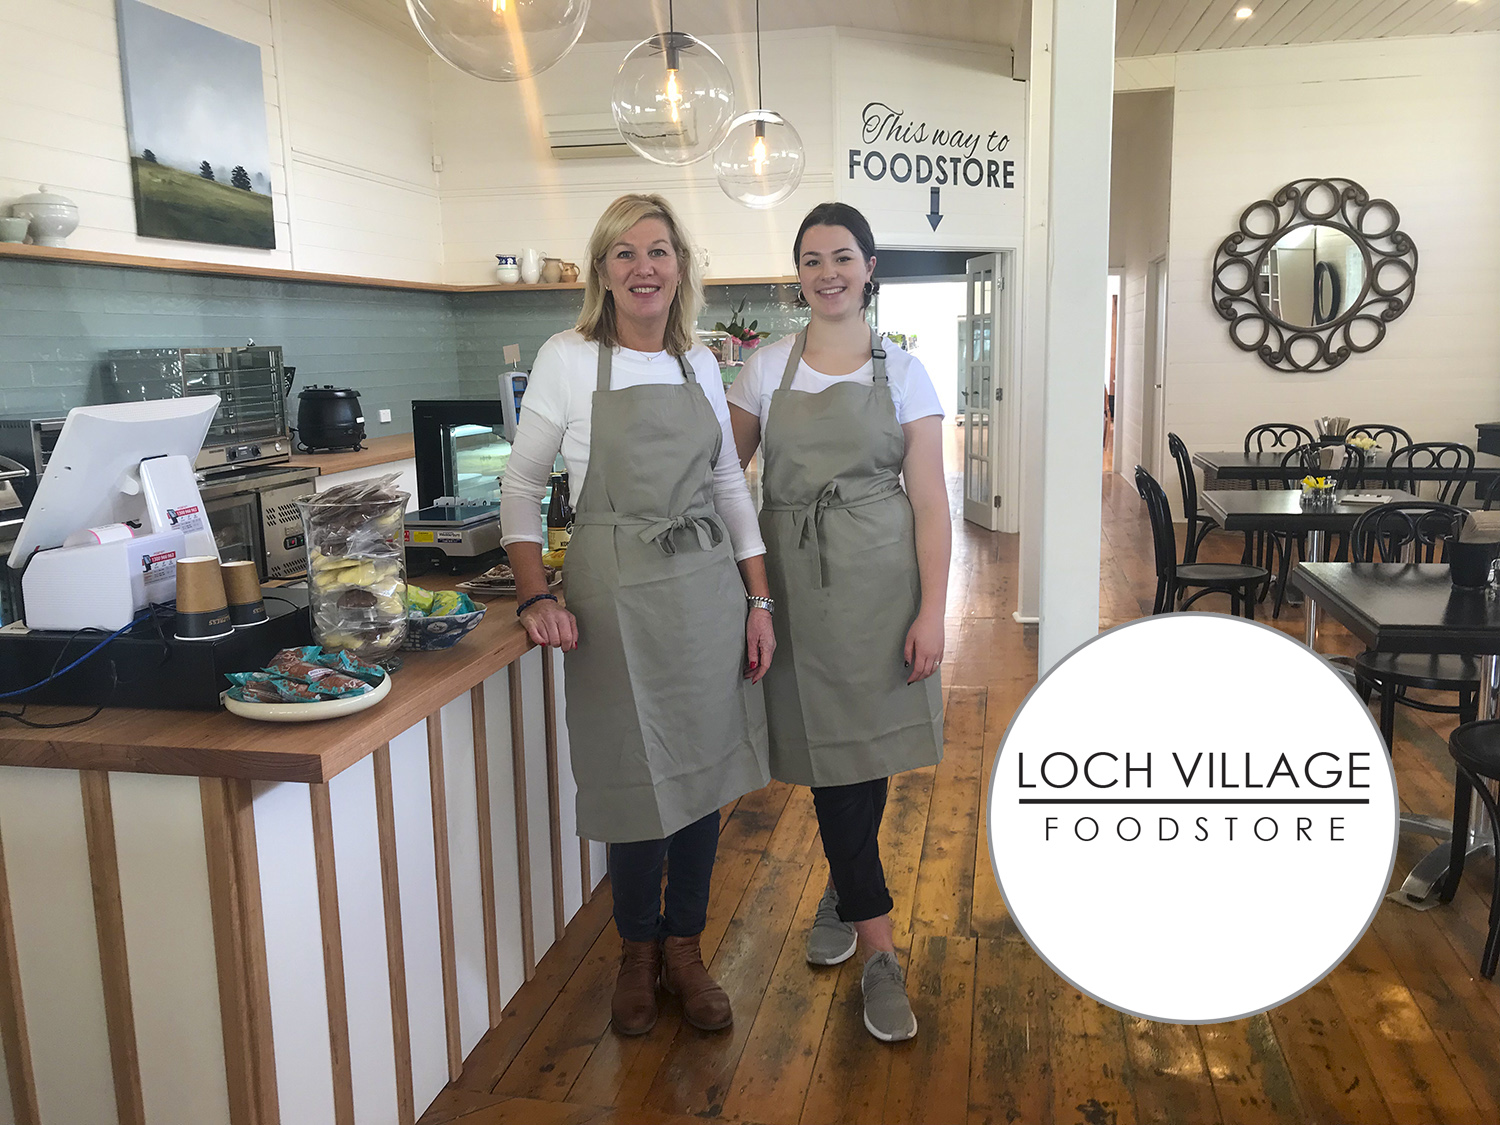 Loch Village Foodstore